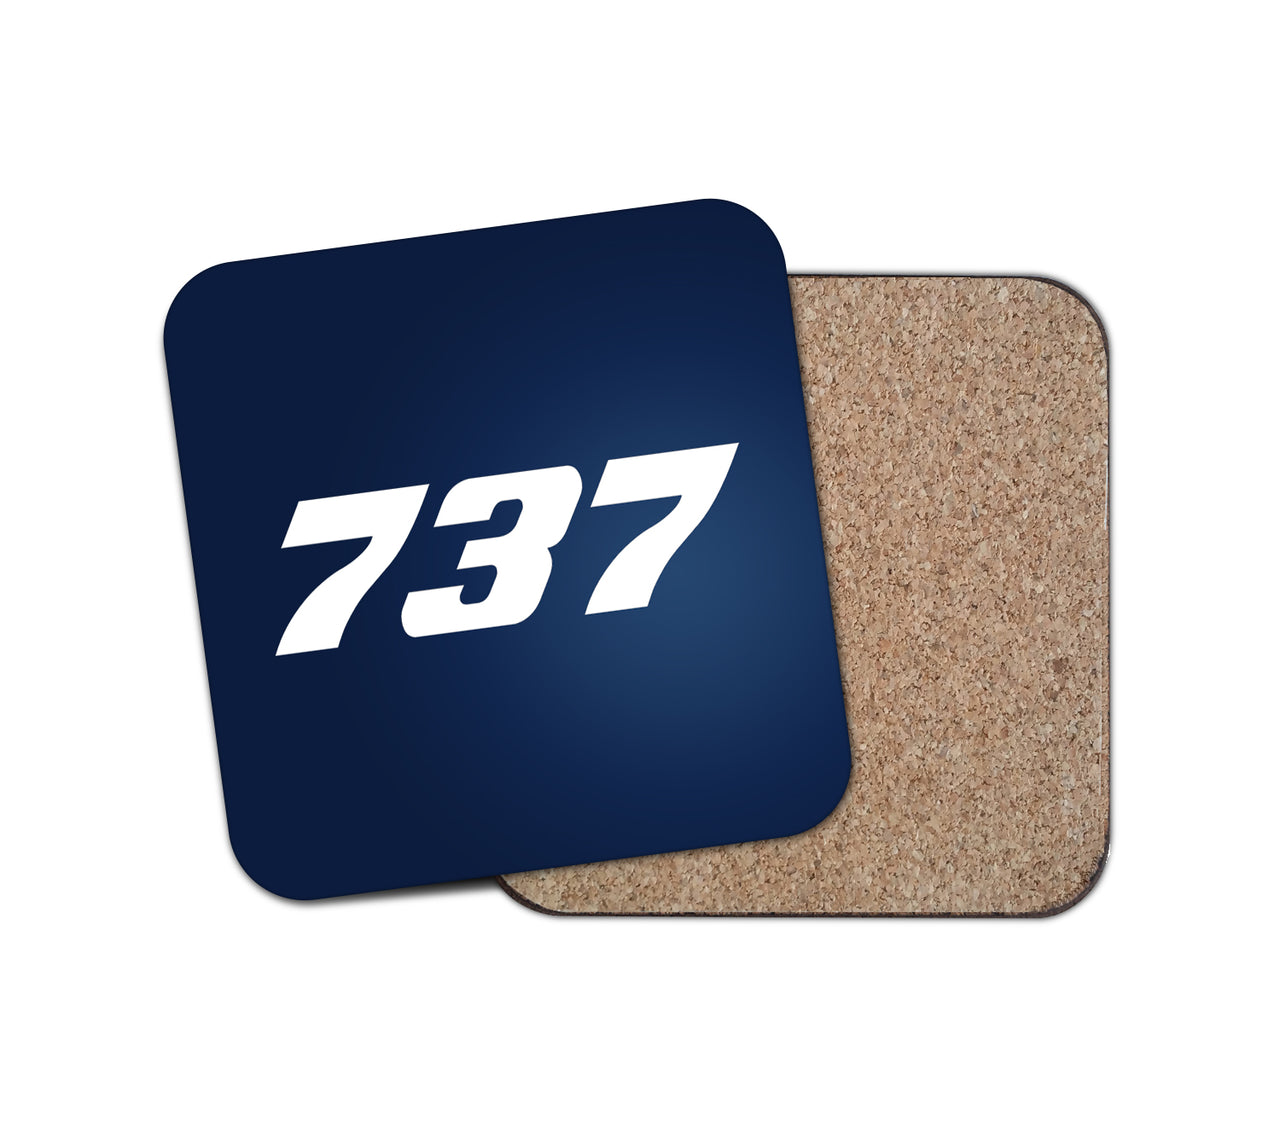 737 Flat Text Designed Coasters